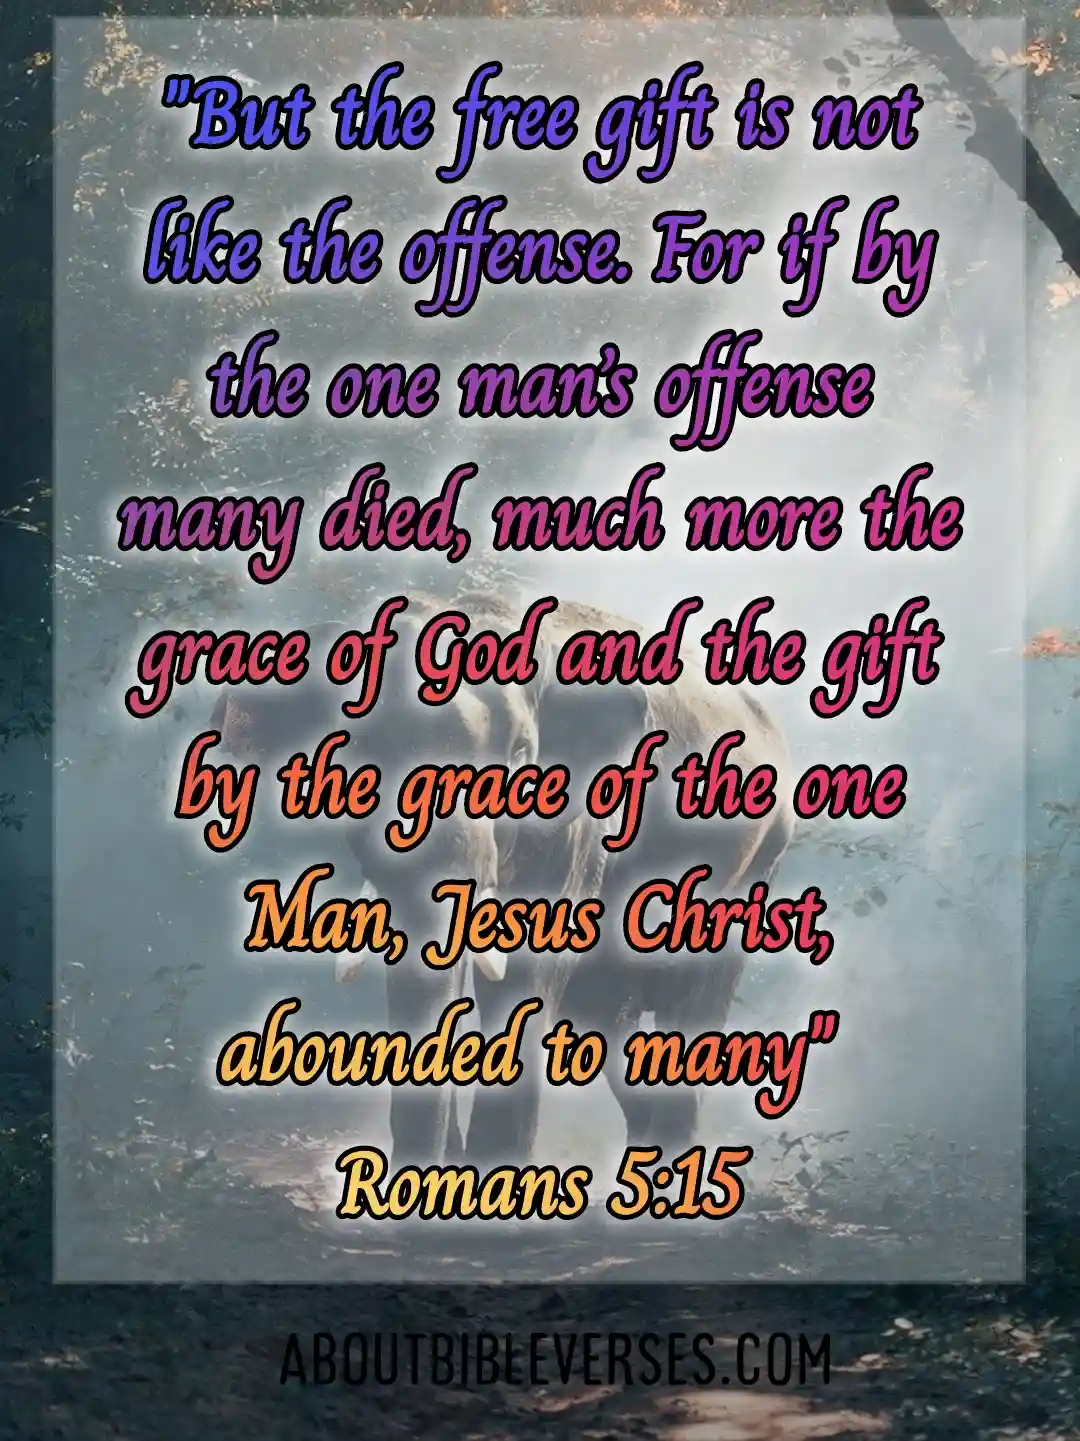 Today bible verse (Romans 5:15)